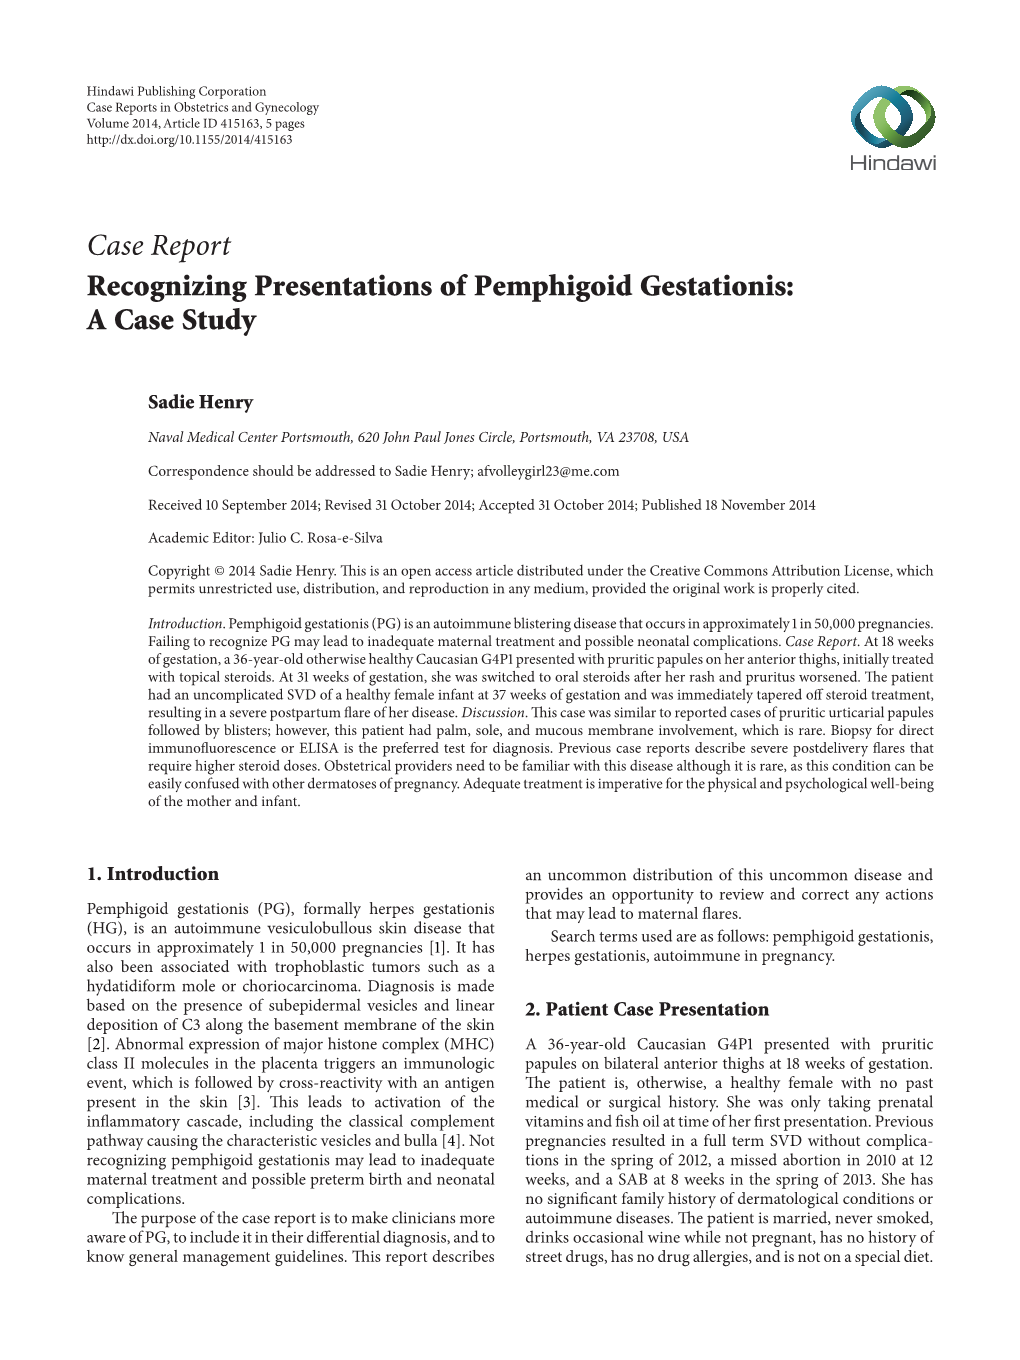 Recognizing Presentations of Pemphigoid Gestationis: a Case Study